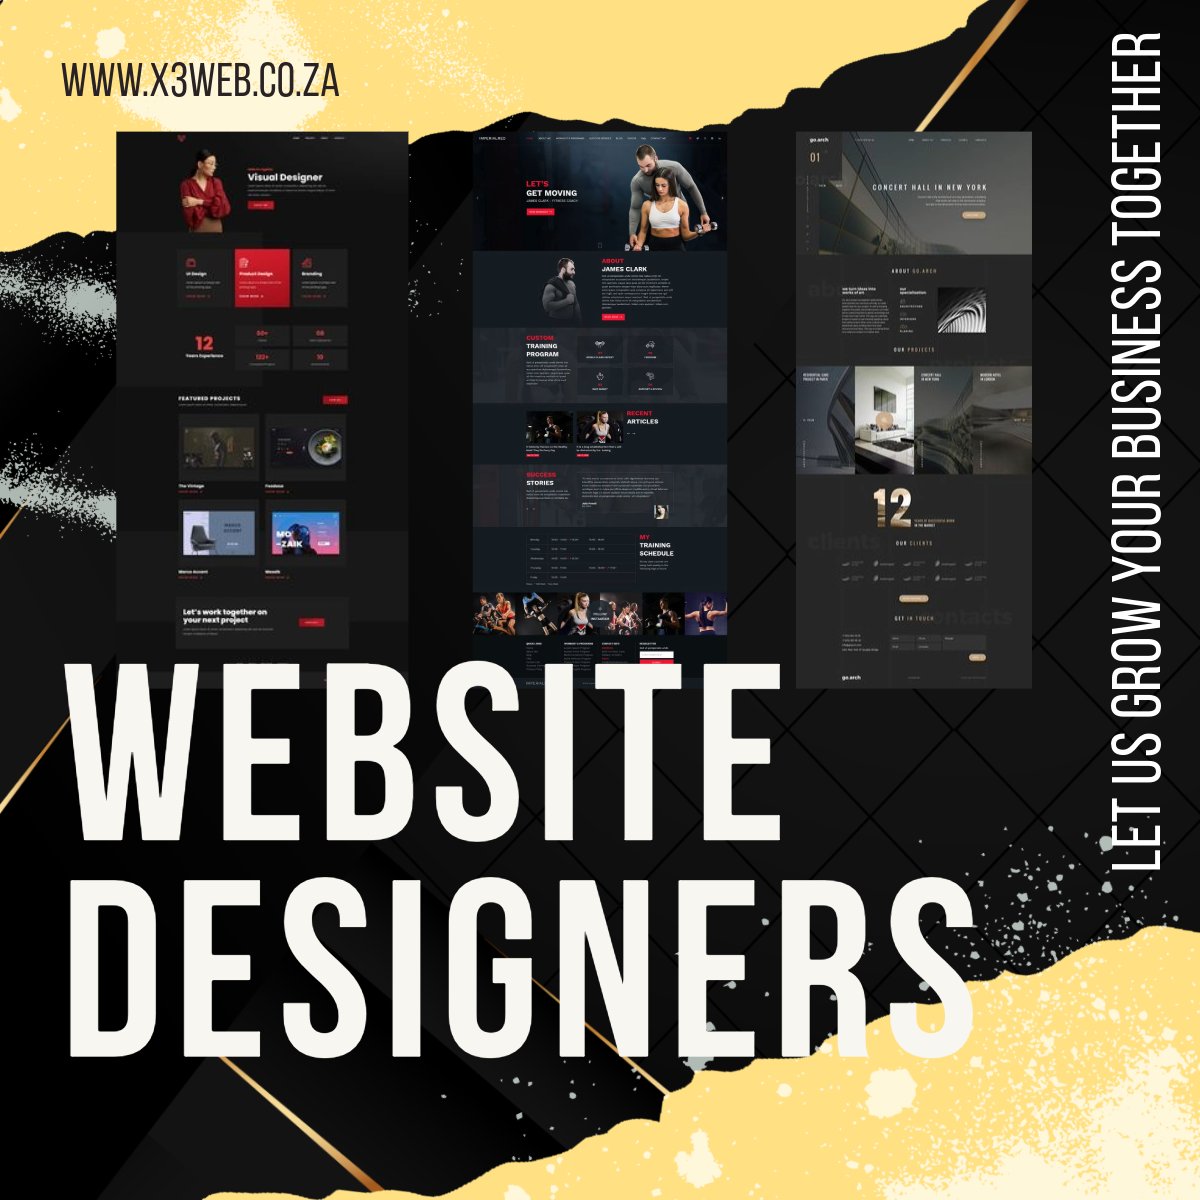 We are Professional website designers 

#websitedesigners #websitecreators #websitedevelpment #websitebuilders #designwebsite #customwebsitedesign #businesswebsitedesign